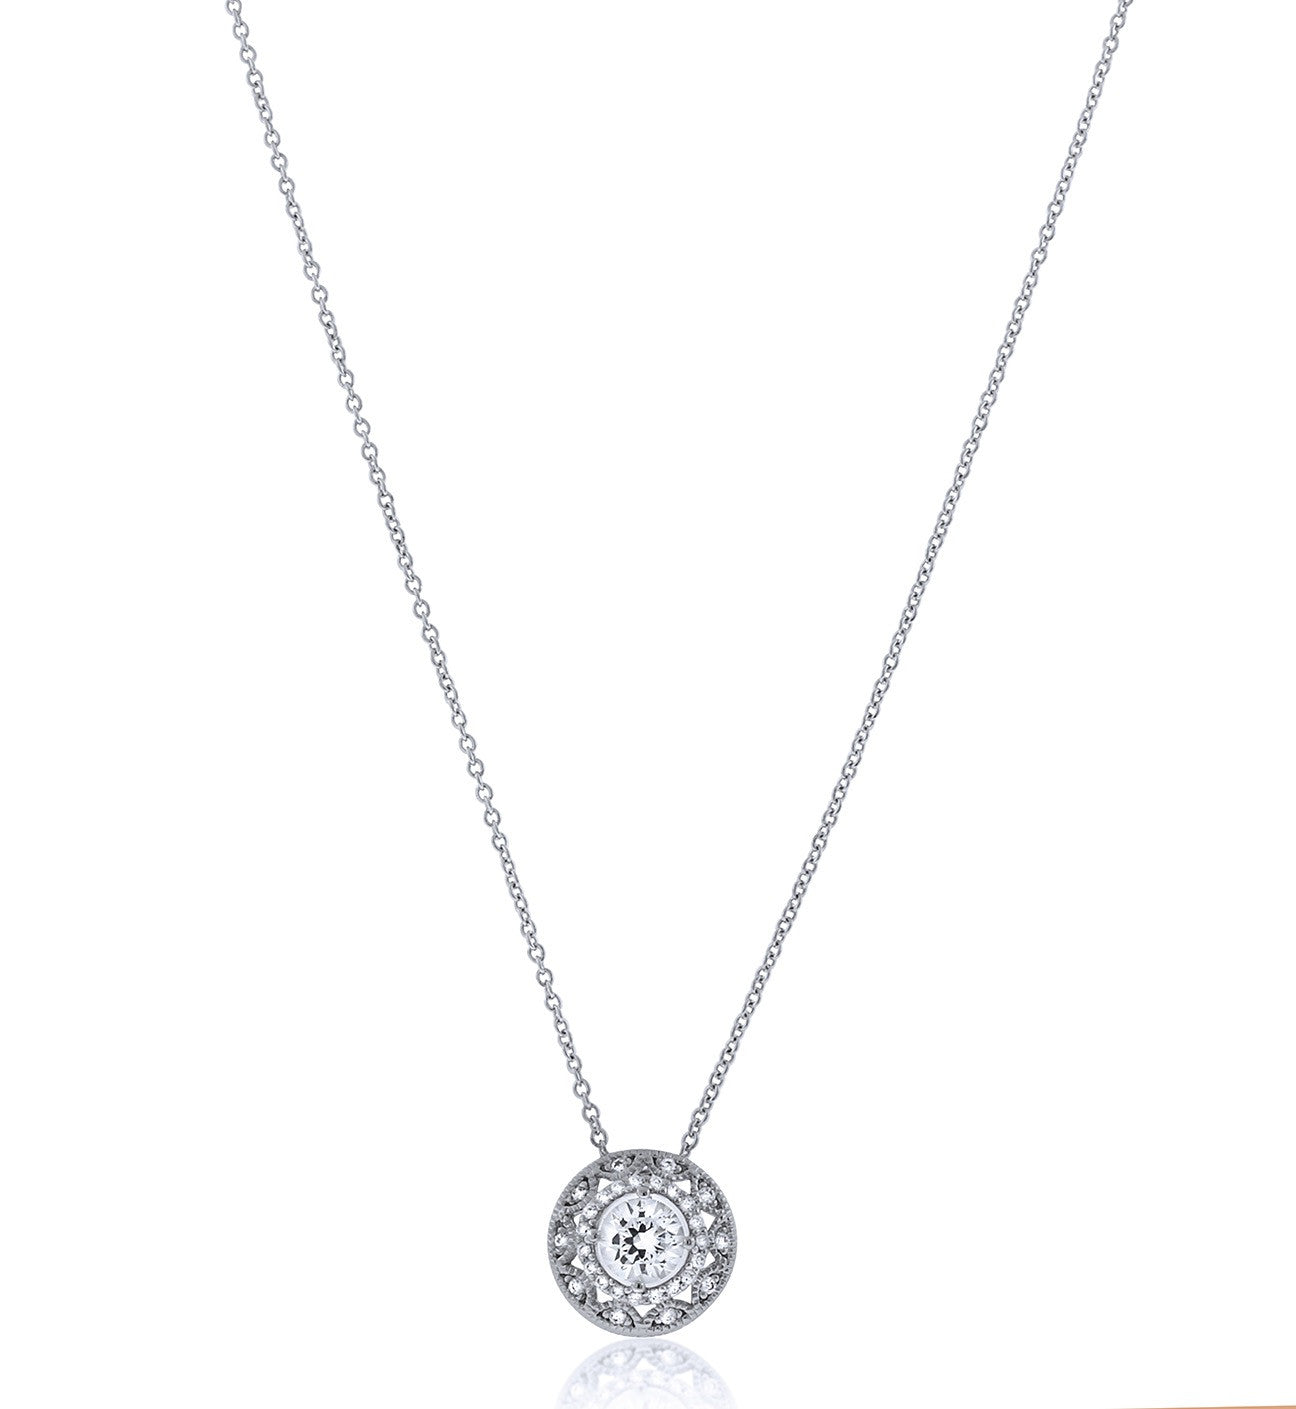 Vintage Inspired Chandi Diamond Circlet Pendant Necklace by Bobby Schandra